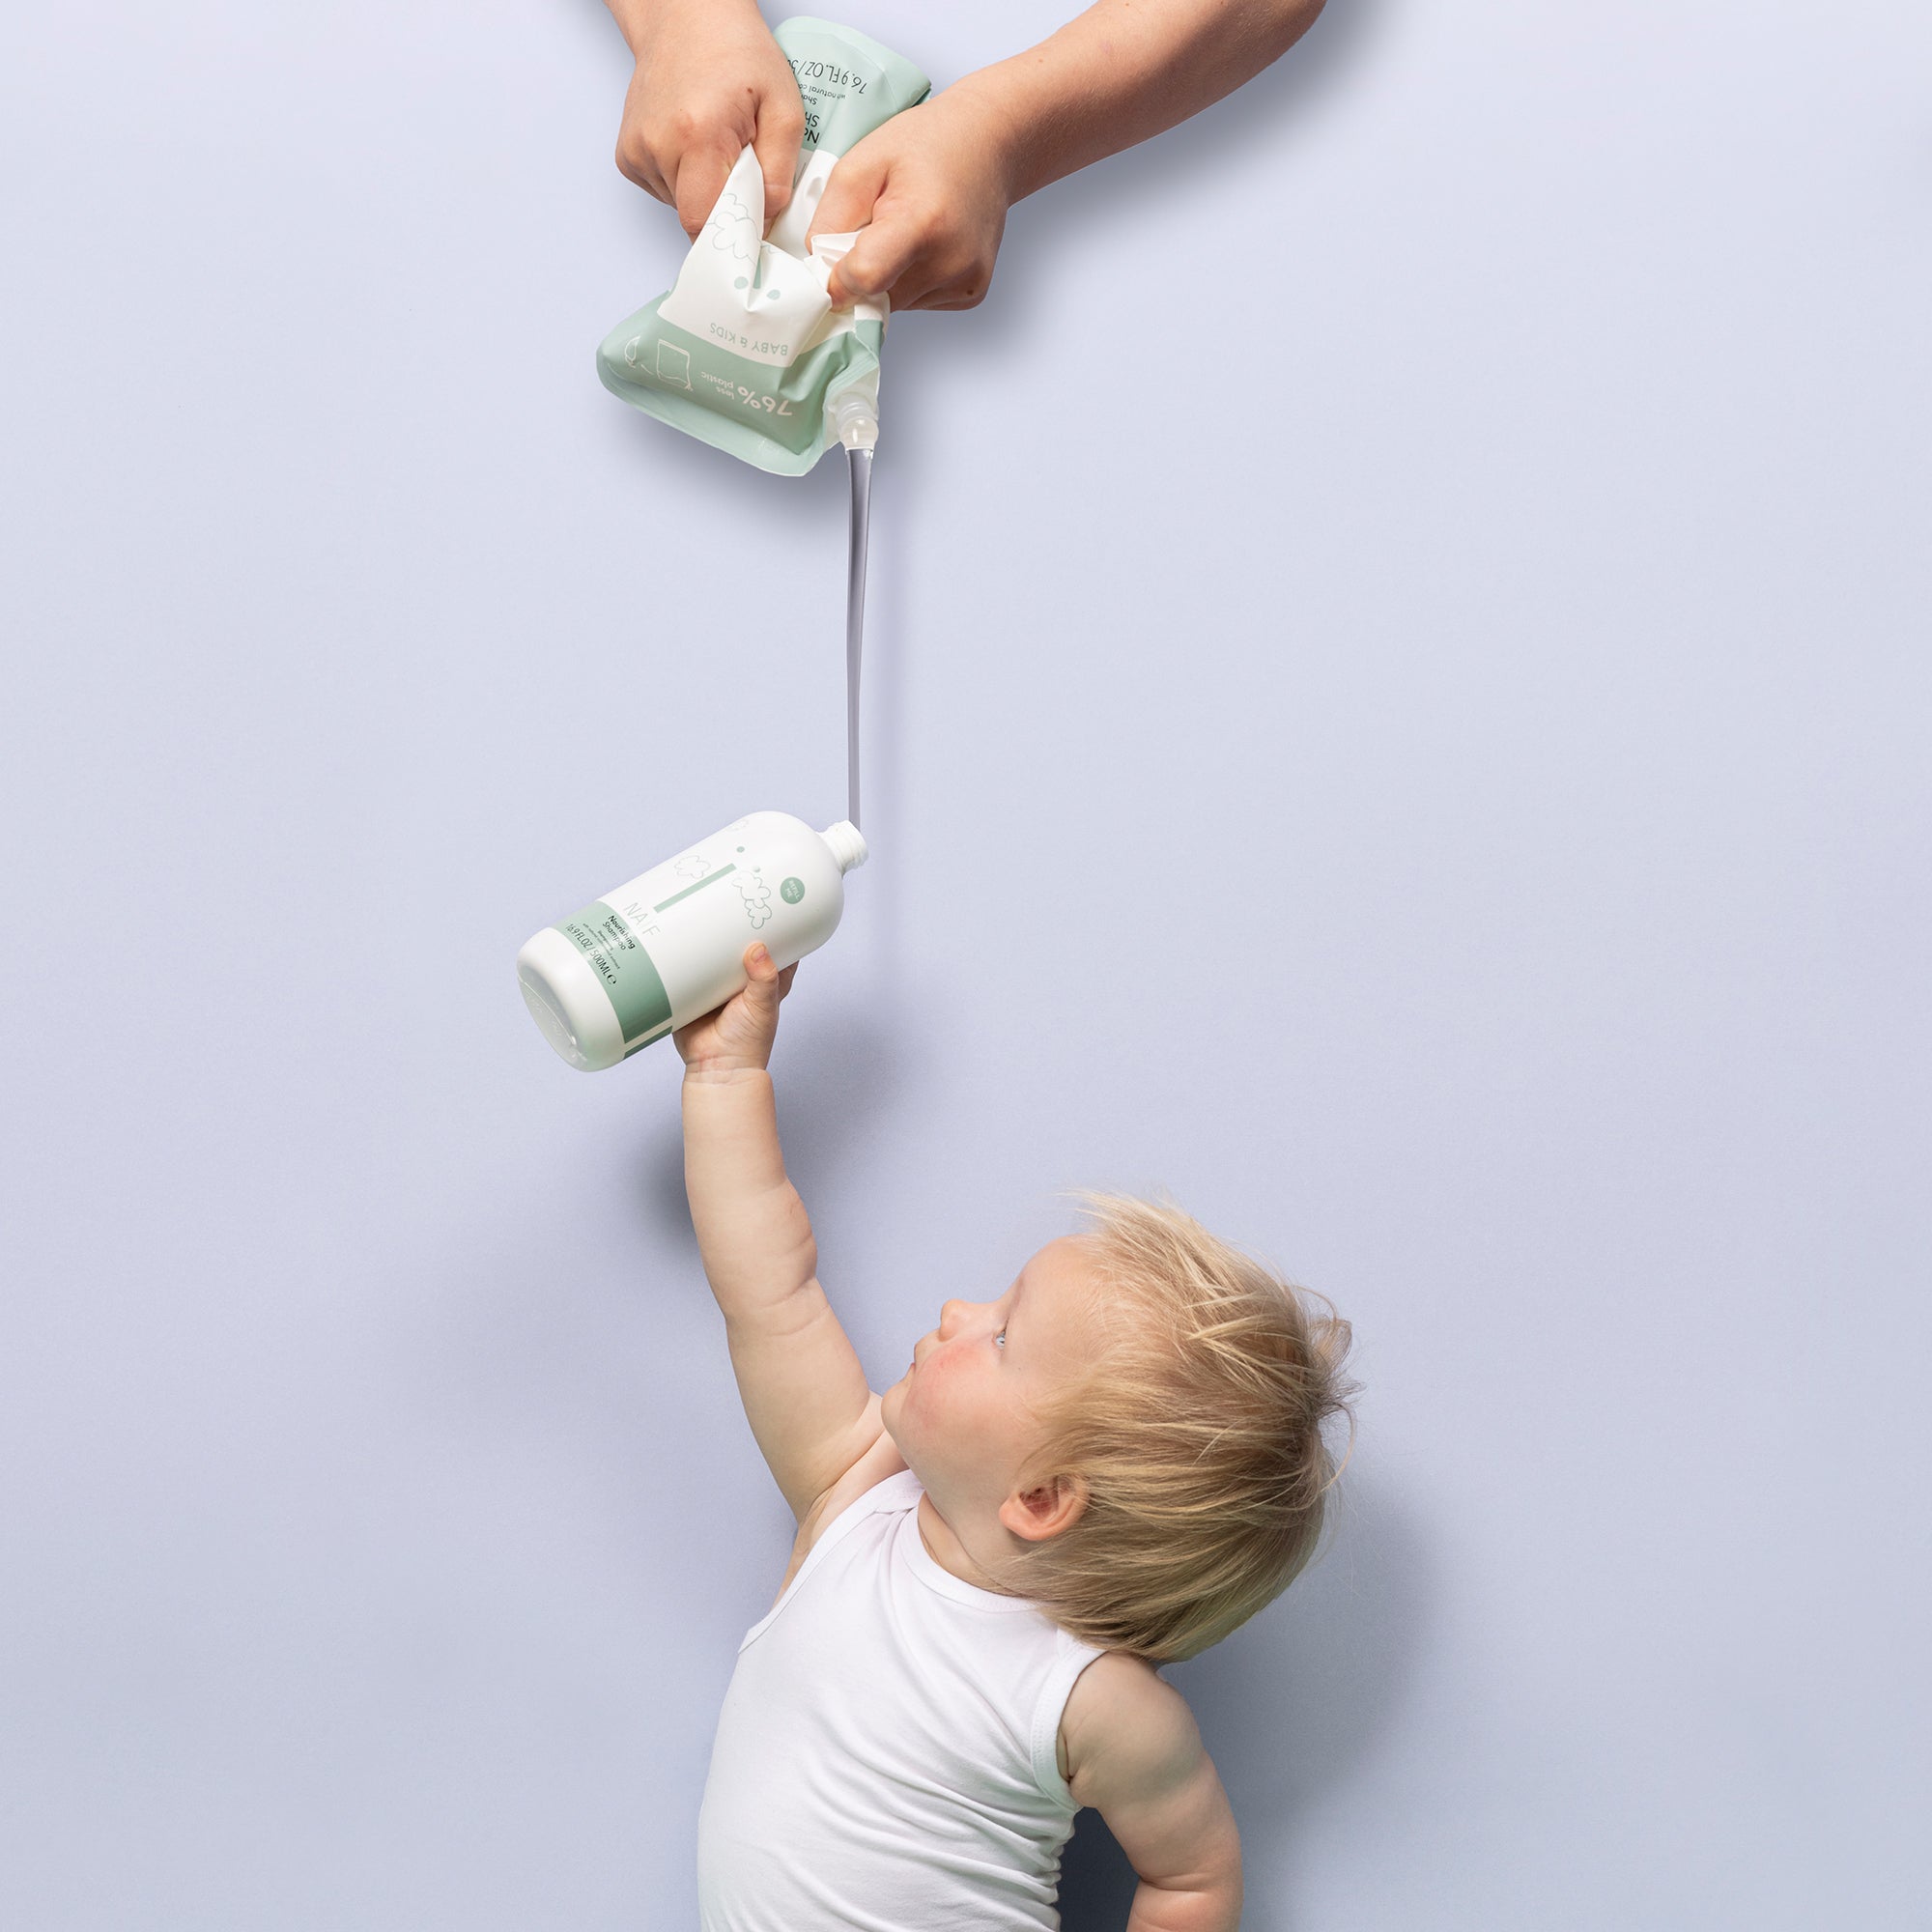 Nourishing Shampoo Pump & Refill Pack for Baby & Kids 2x 500ML